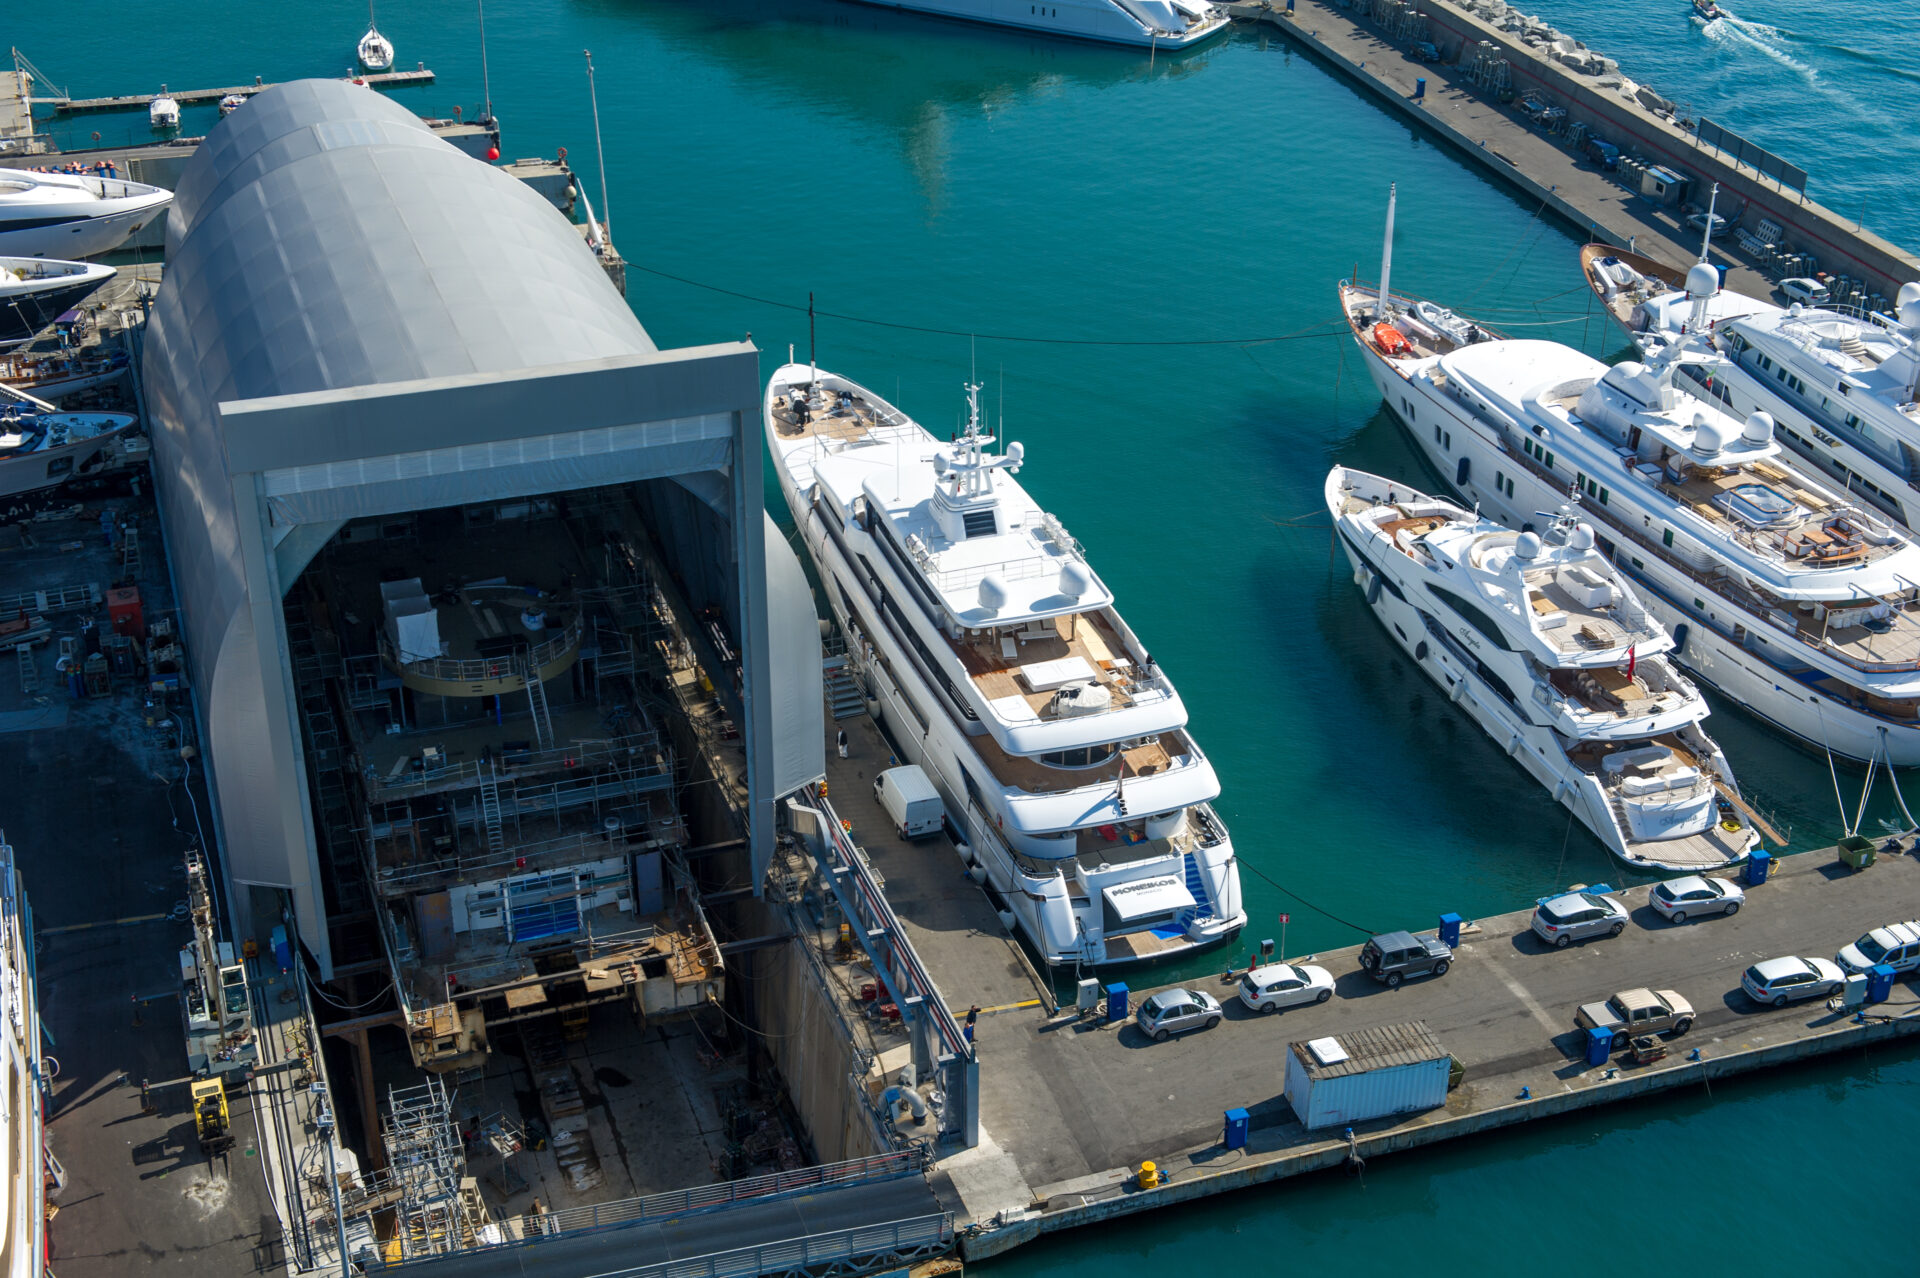 Yacht Refit Shipyard | Superyacht Refit Yard | Amico & Co